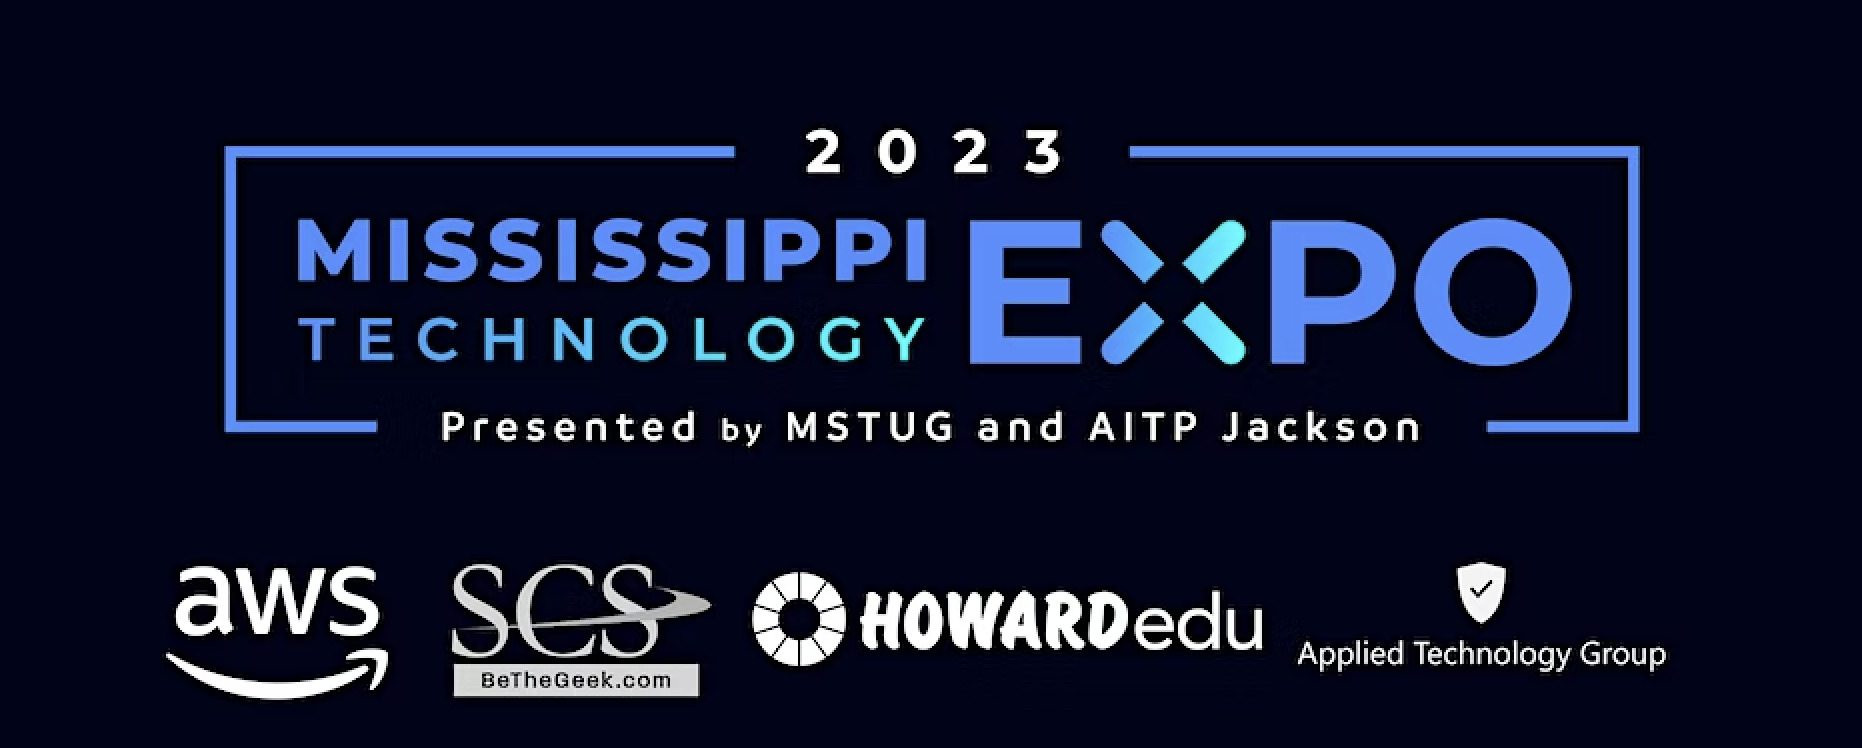 2023 Mississippi Technology Expo